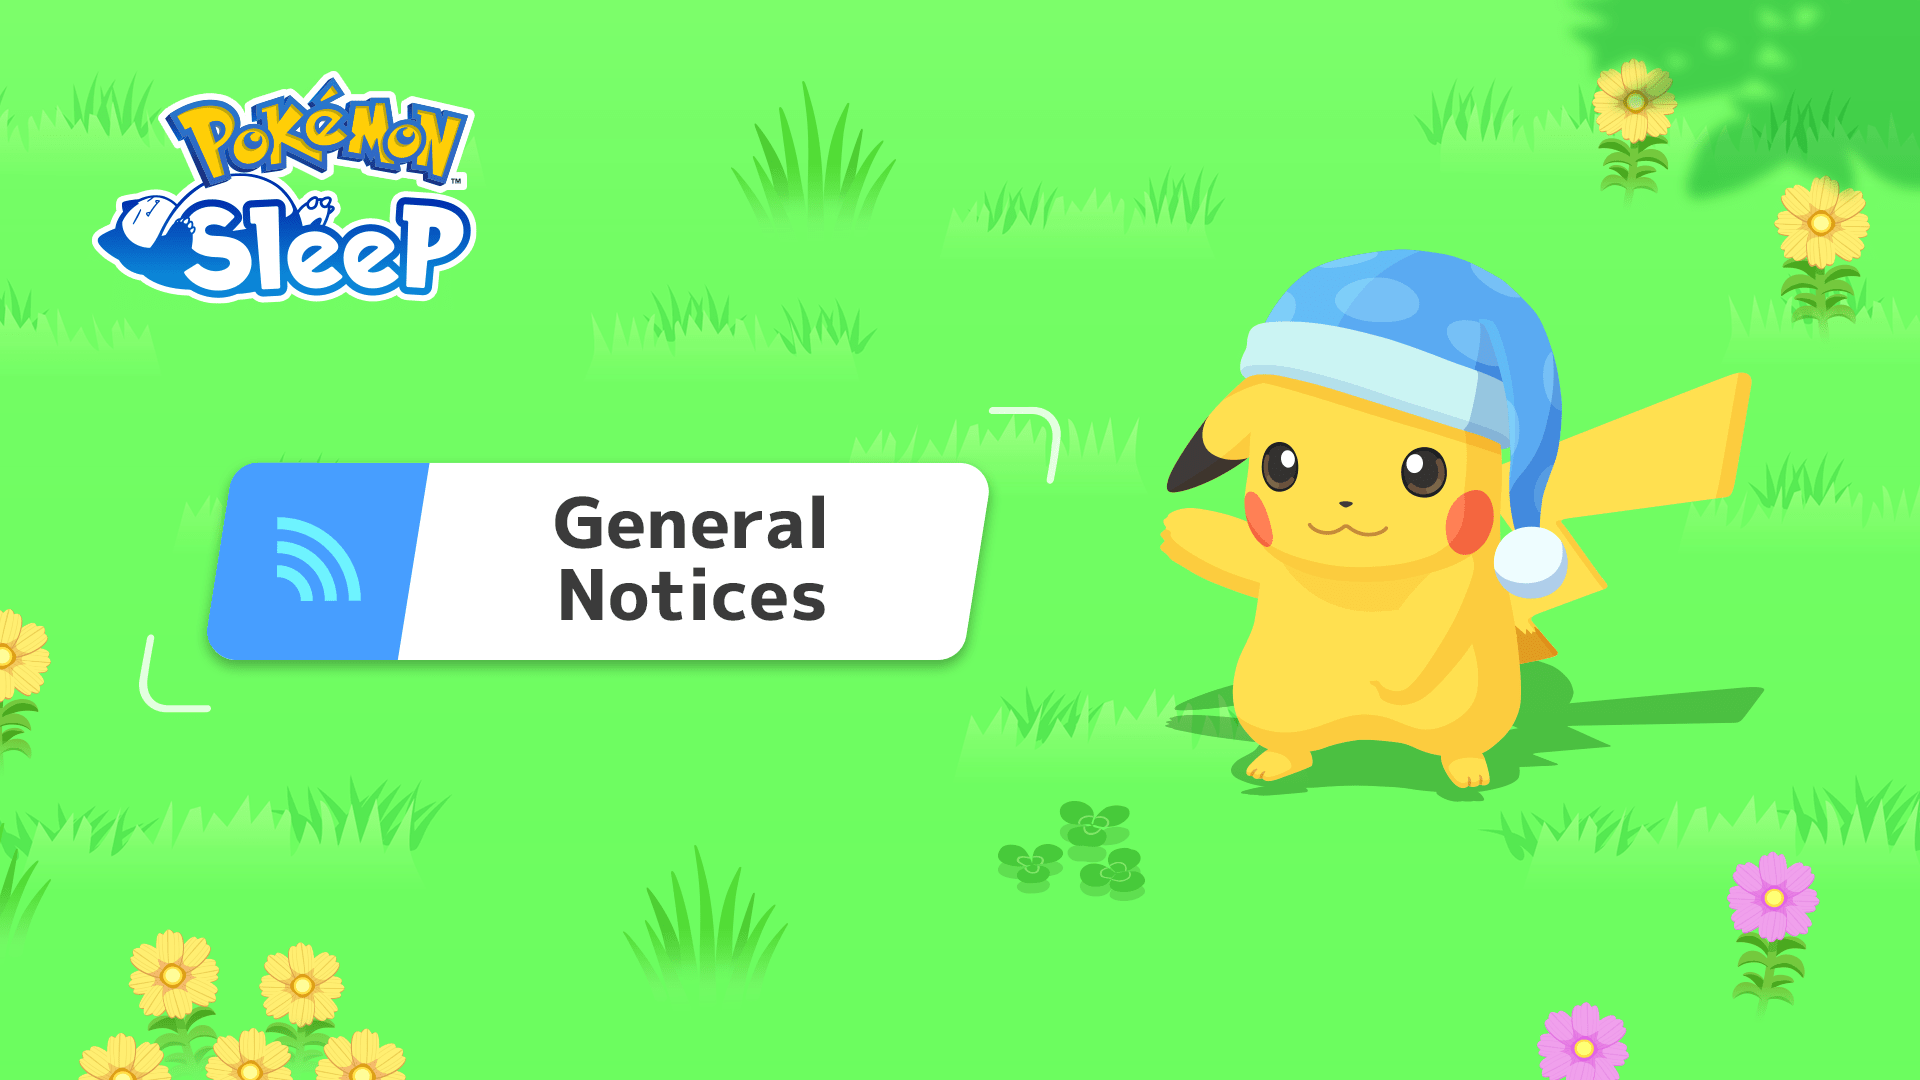 Pokémon Sleep - General Notices